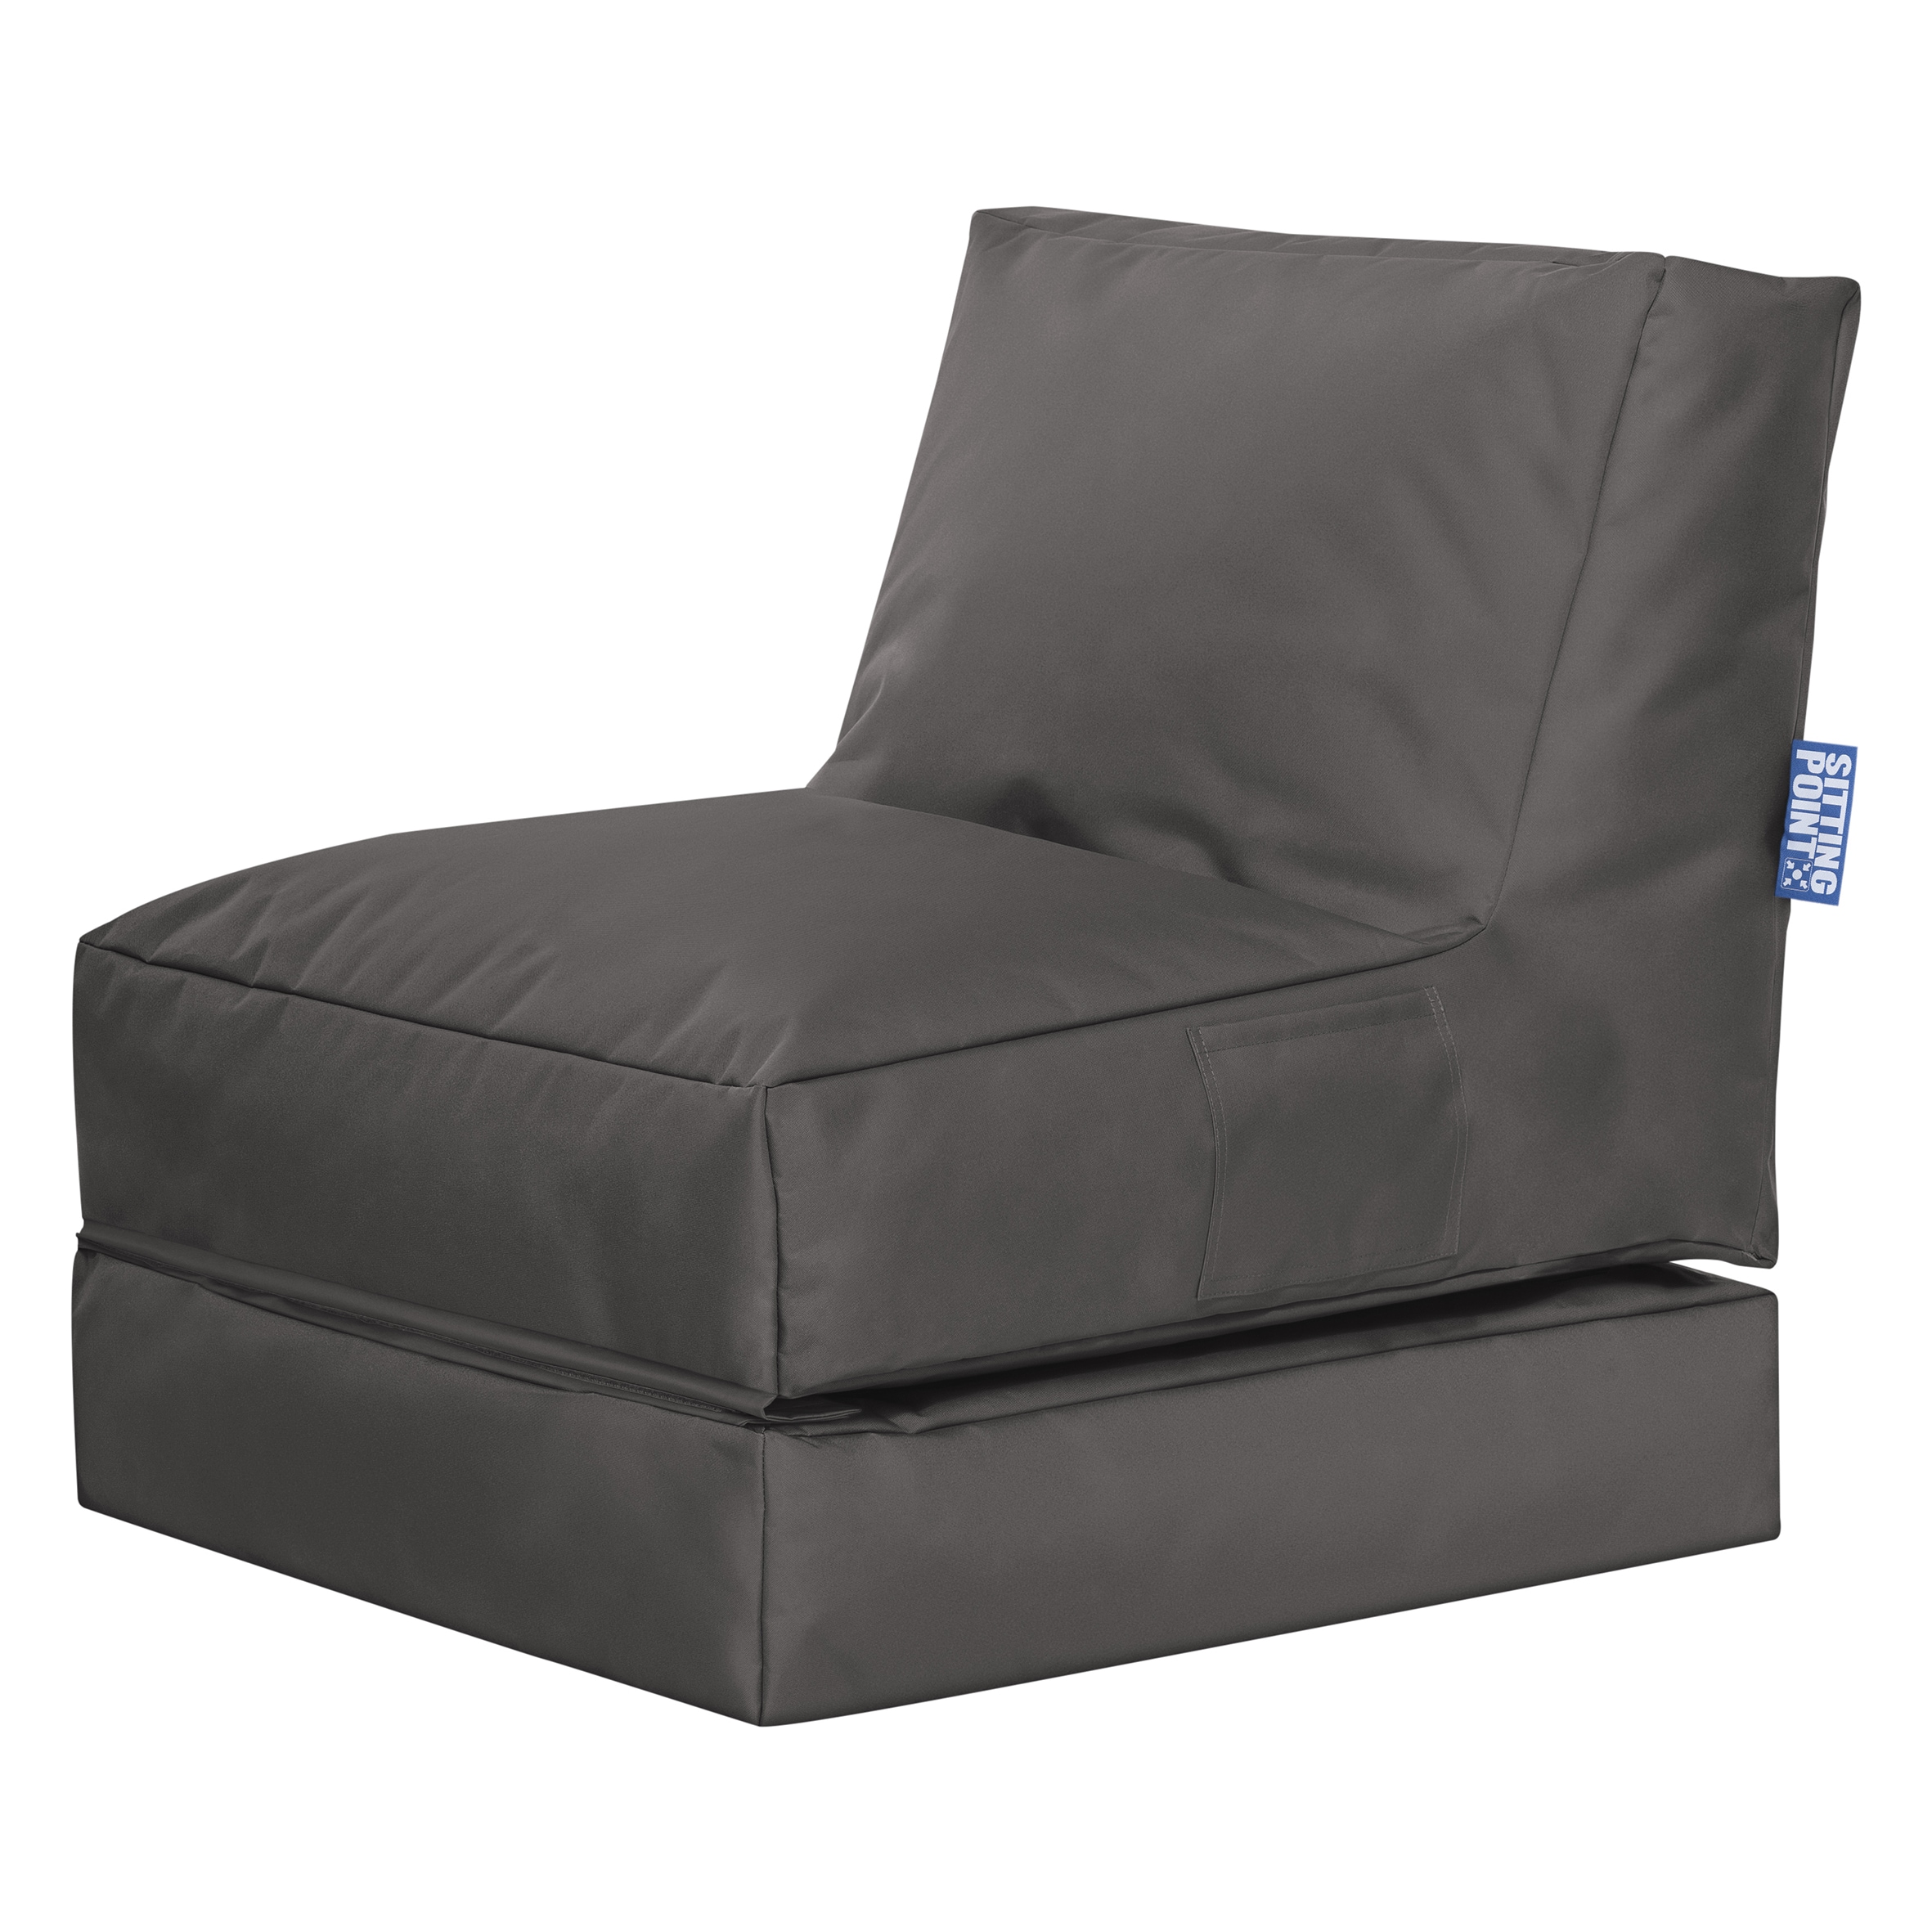 Sitting Point Twist Brava - Lounge Sale & Bath Bean - - Bed Beyond On 12271703 Bag Chair